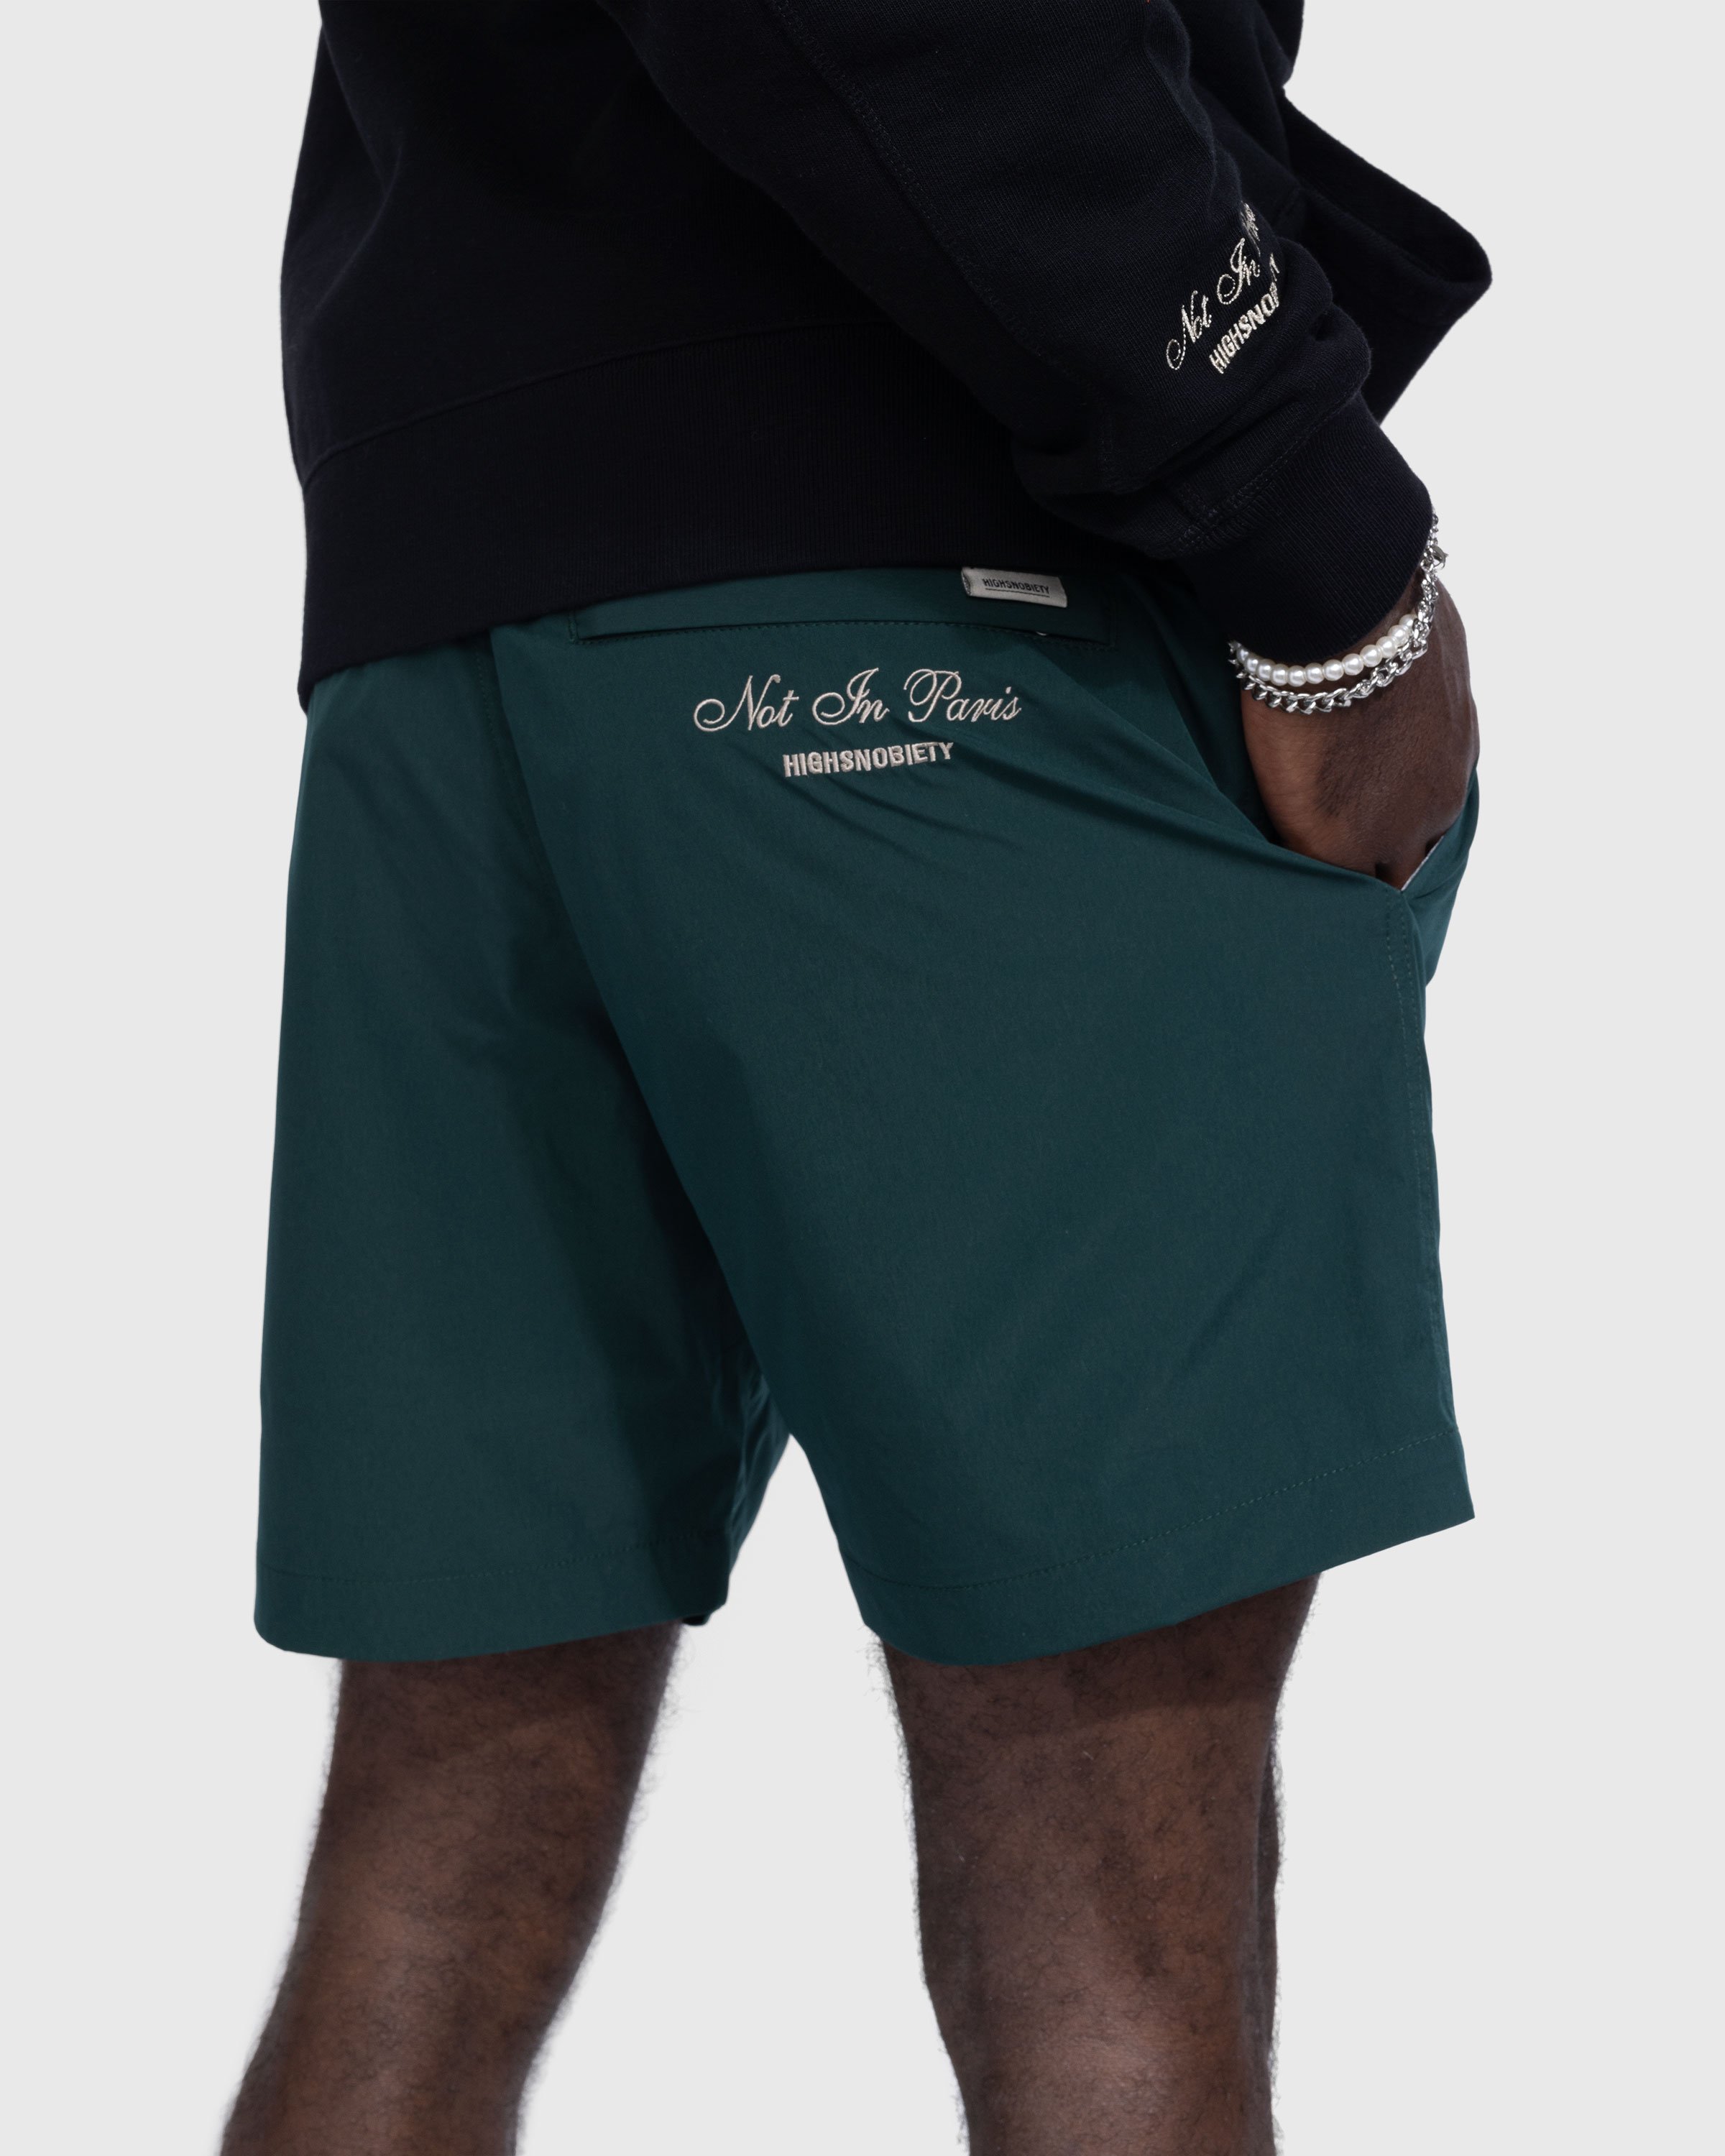 Highsnobiety - Not in Paris 5 Nylon Shorts - Clothing - Green - Image 4